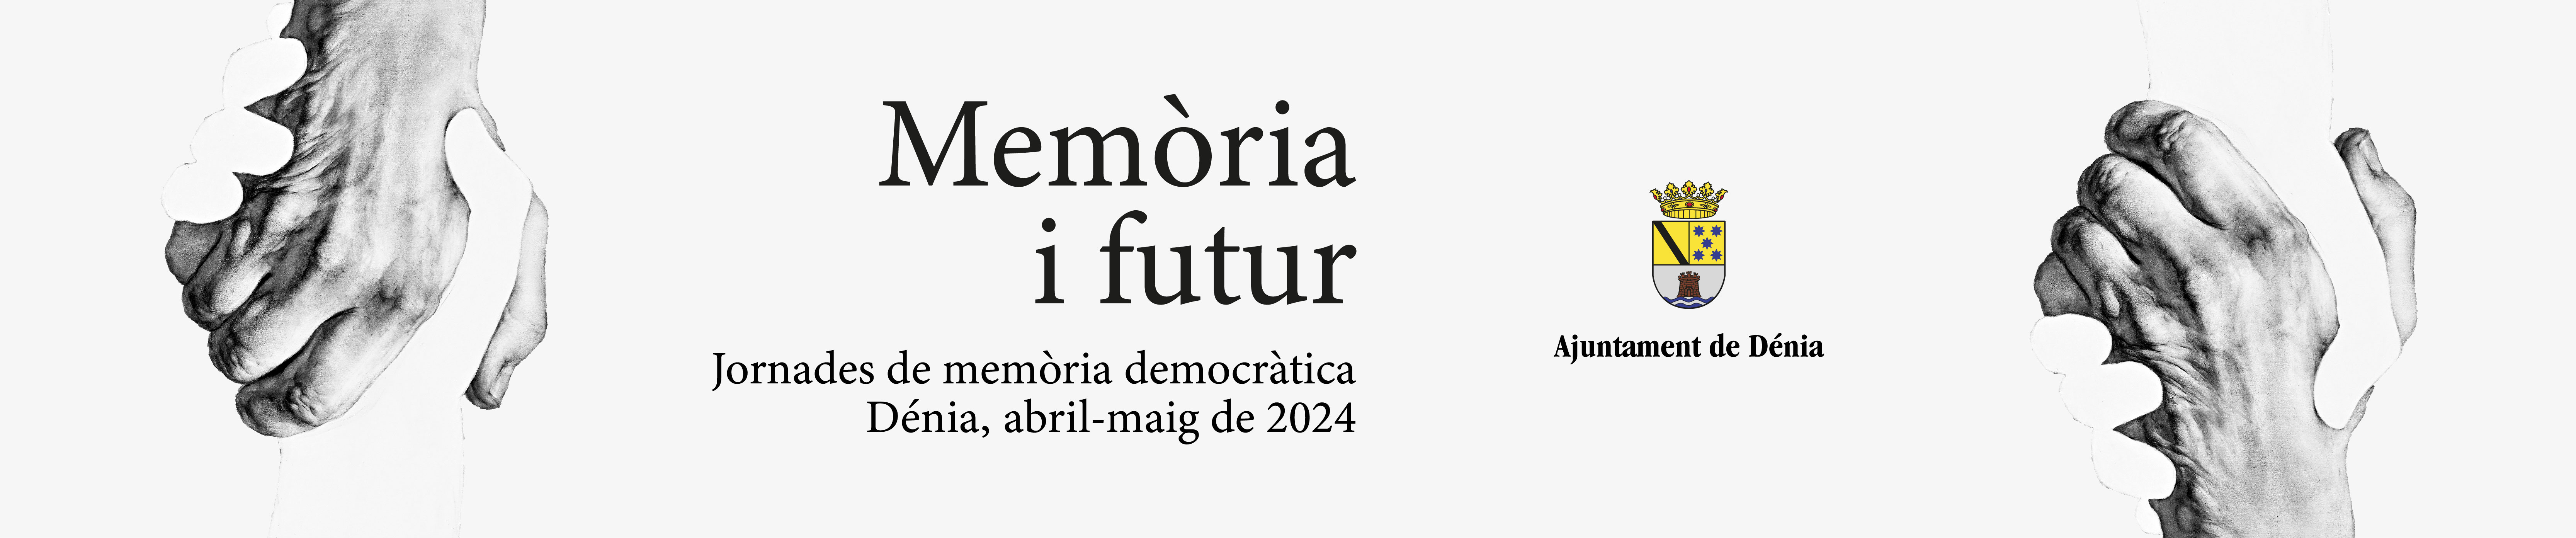 Memòria i futur · Jornades de memòria democràtica